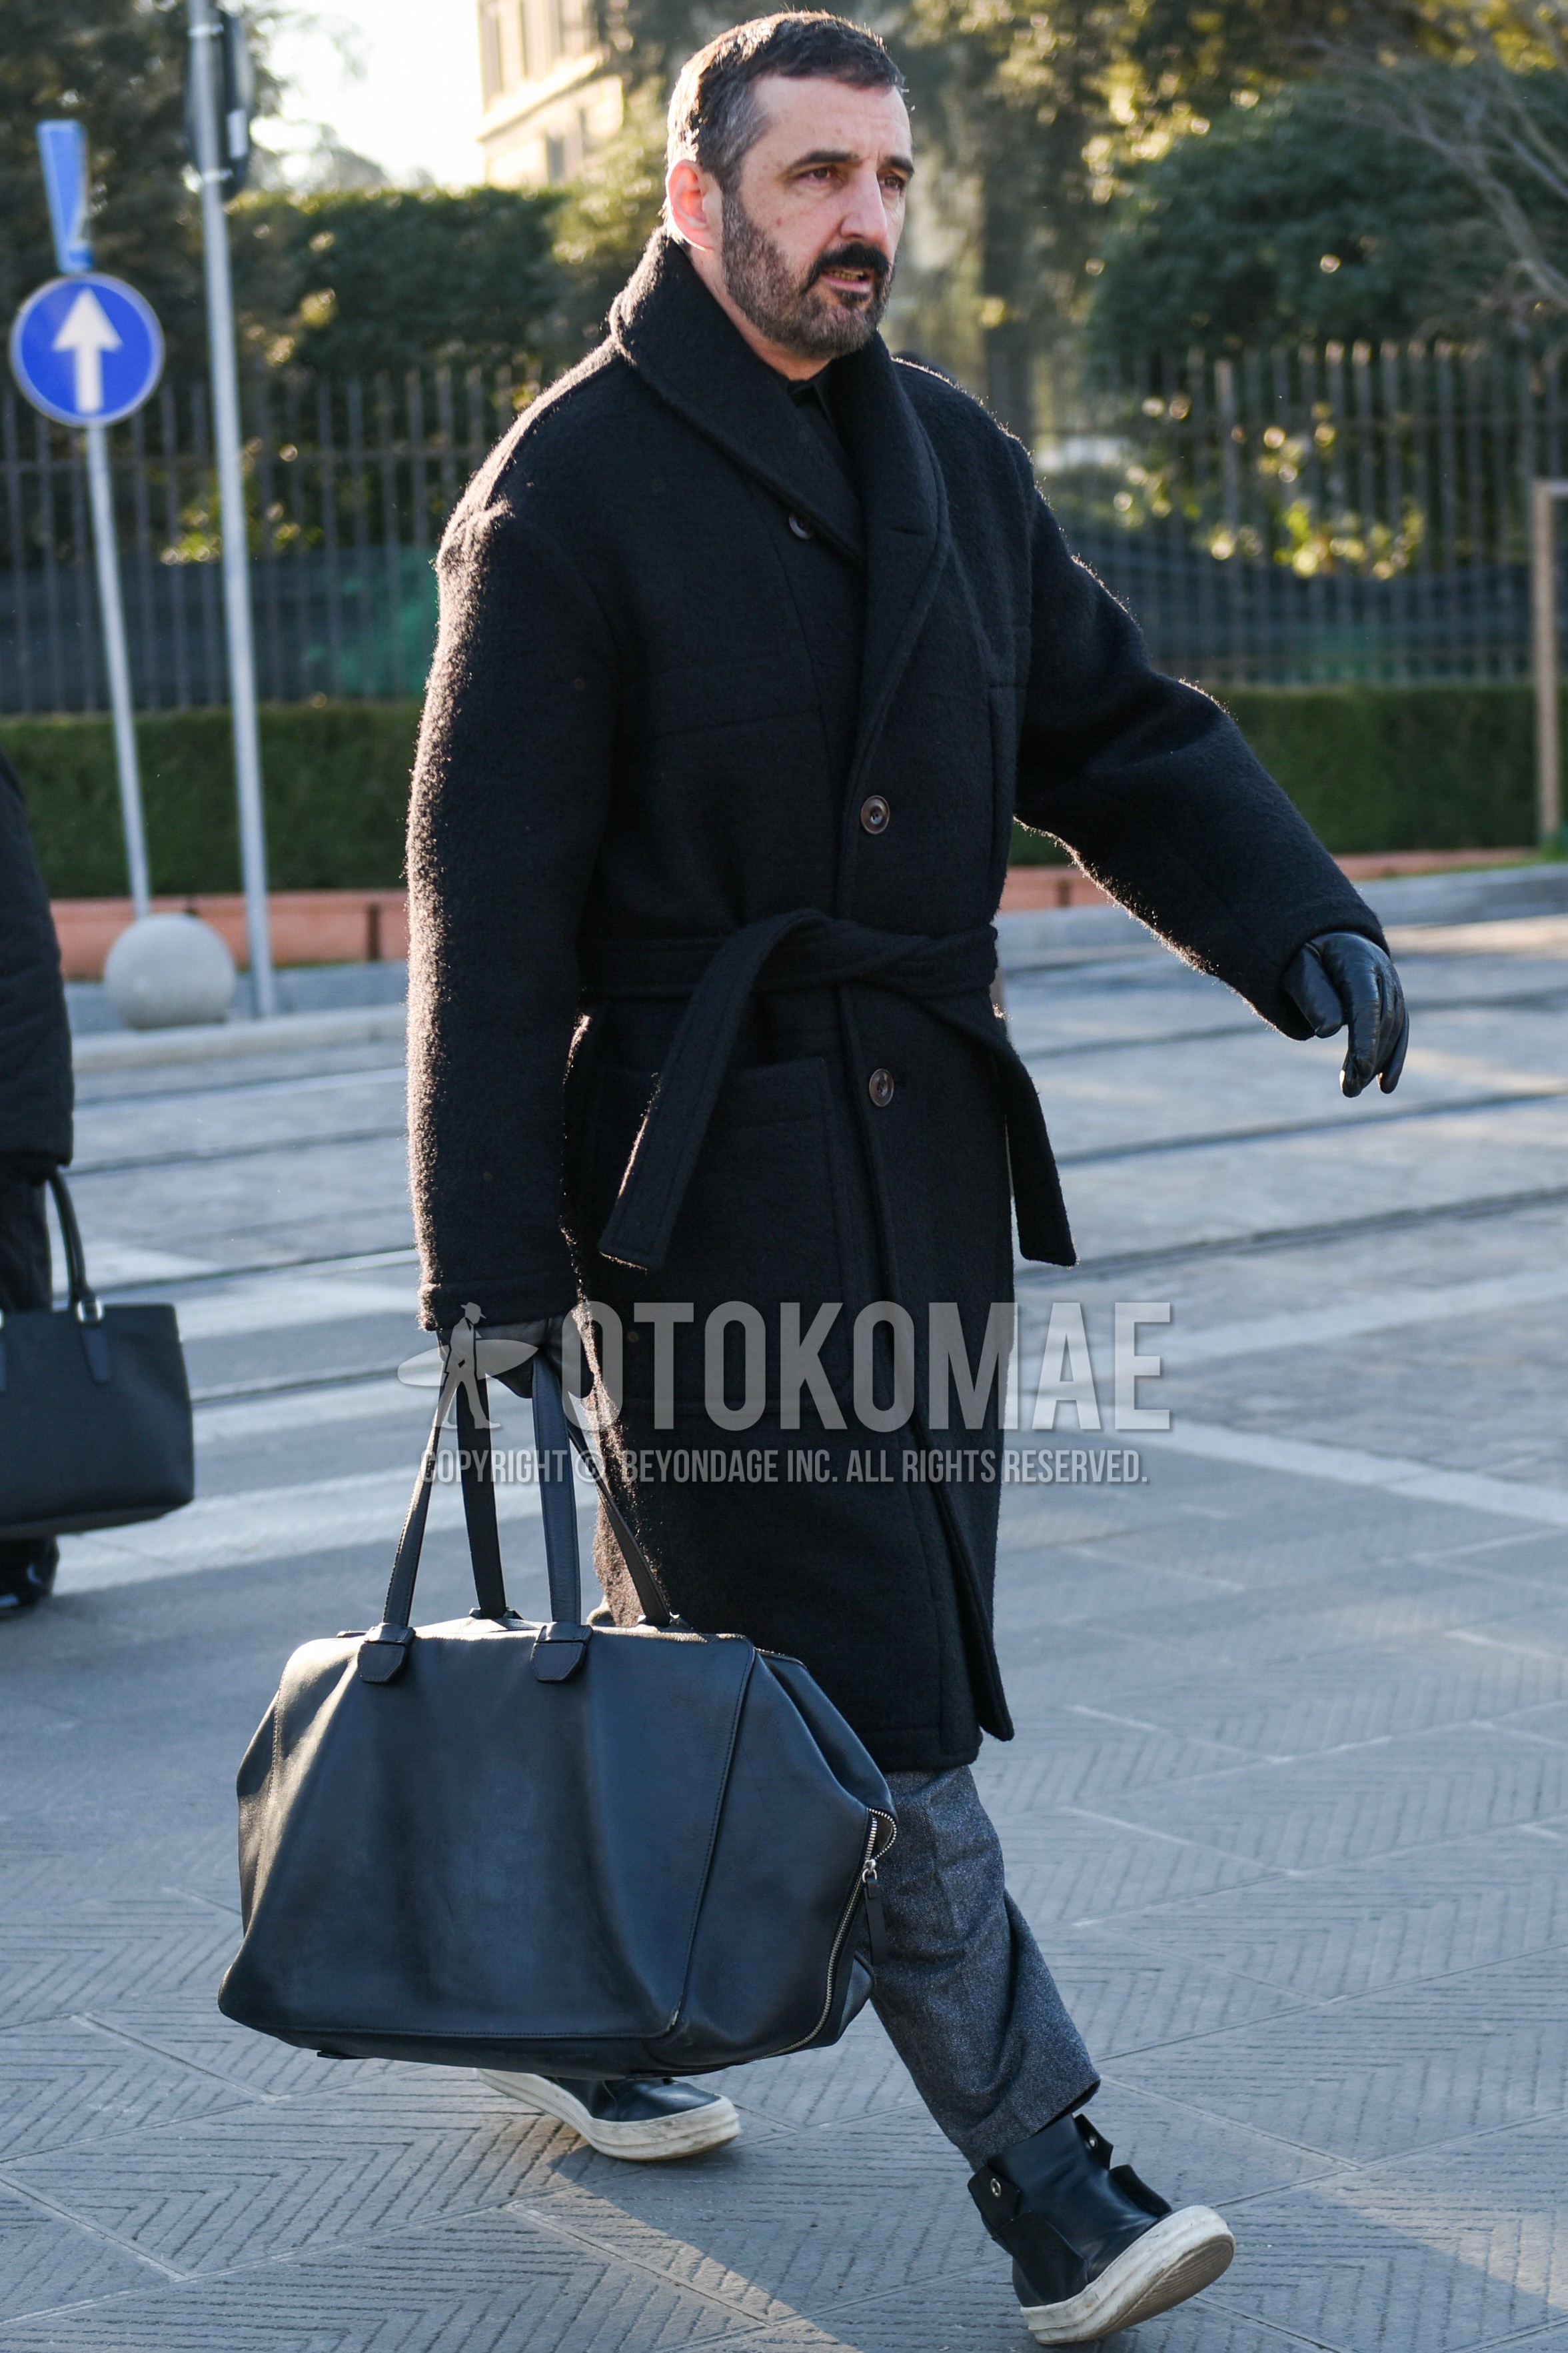 Men's autumn winter outfit with black plain belted coat, gray plain slacks, black high-cut sneakers, dark gray plain briefcase/handbag.